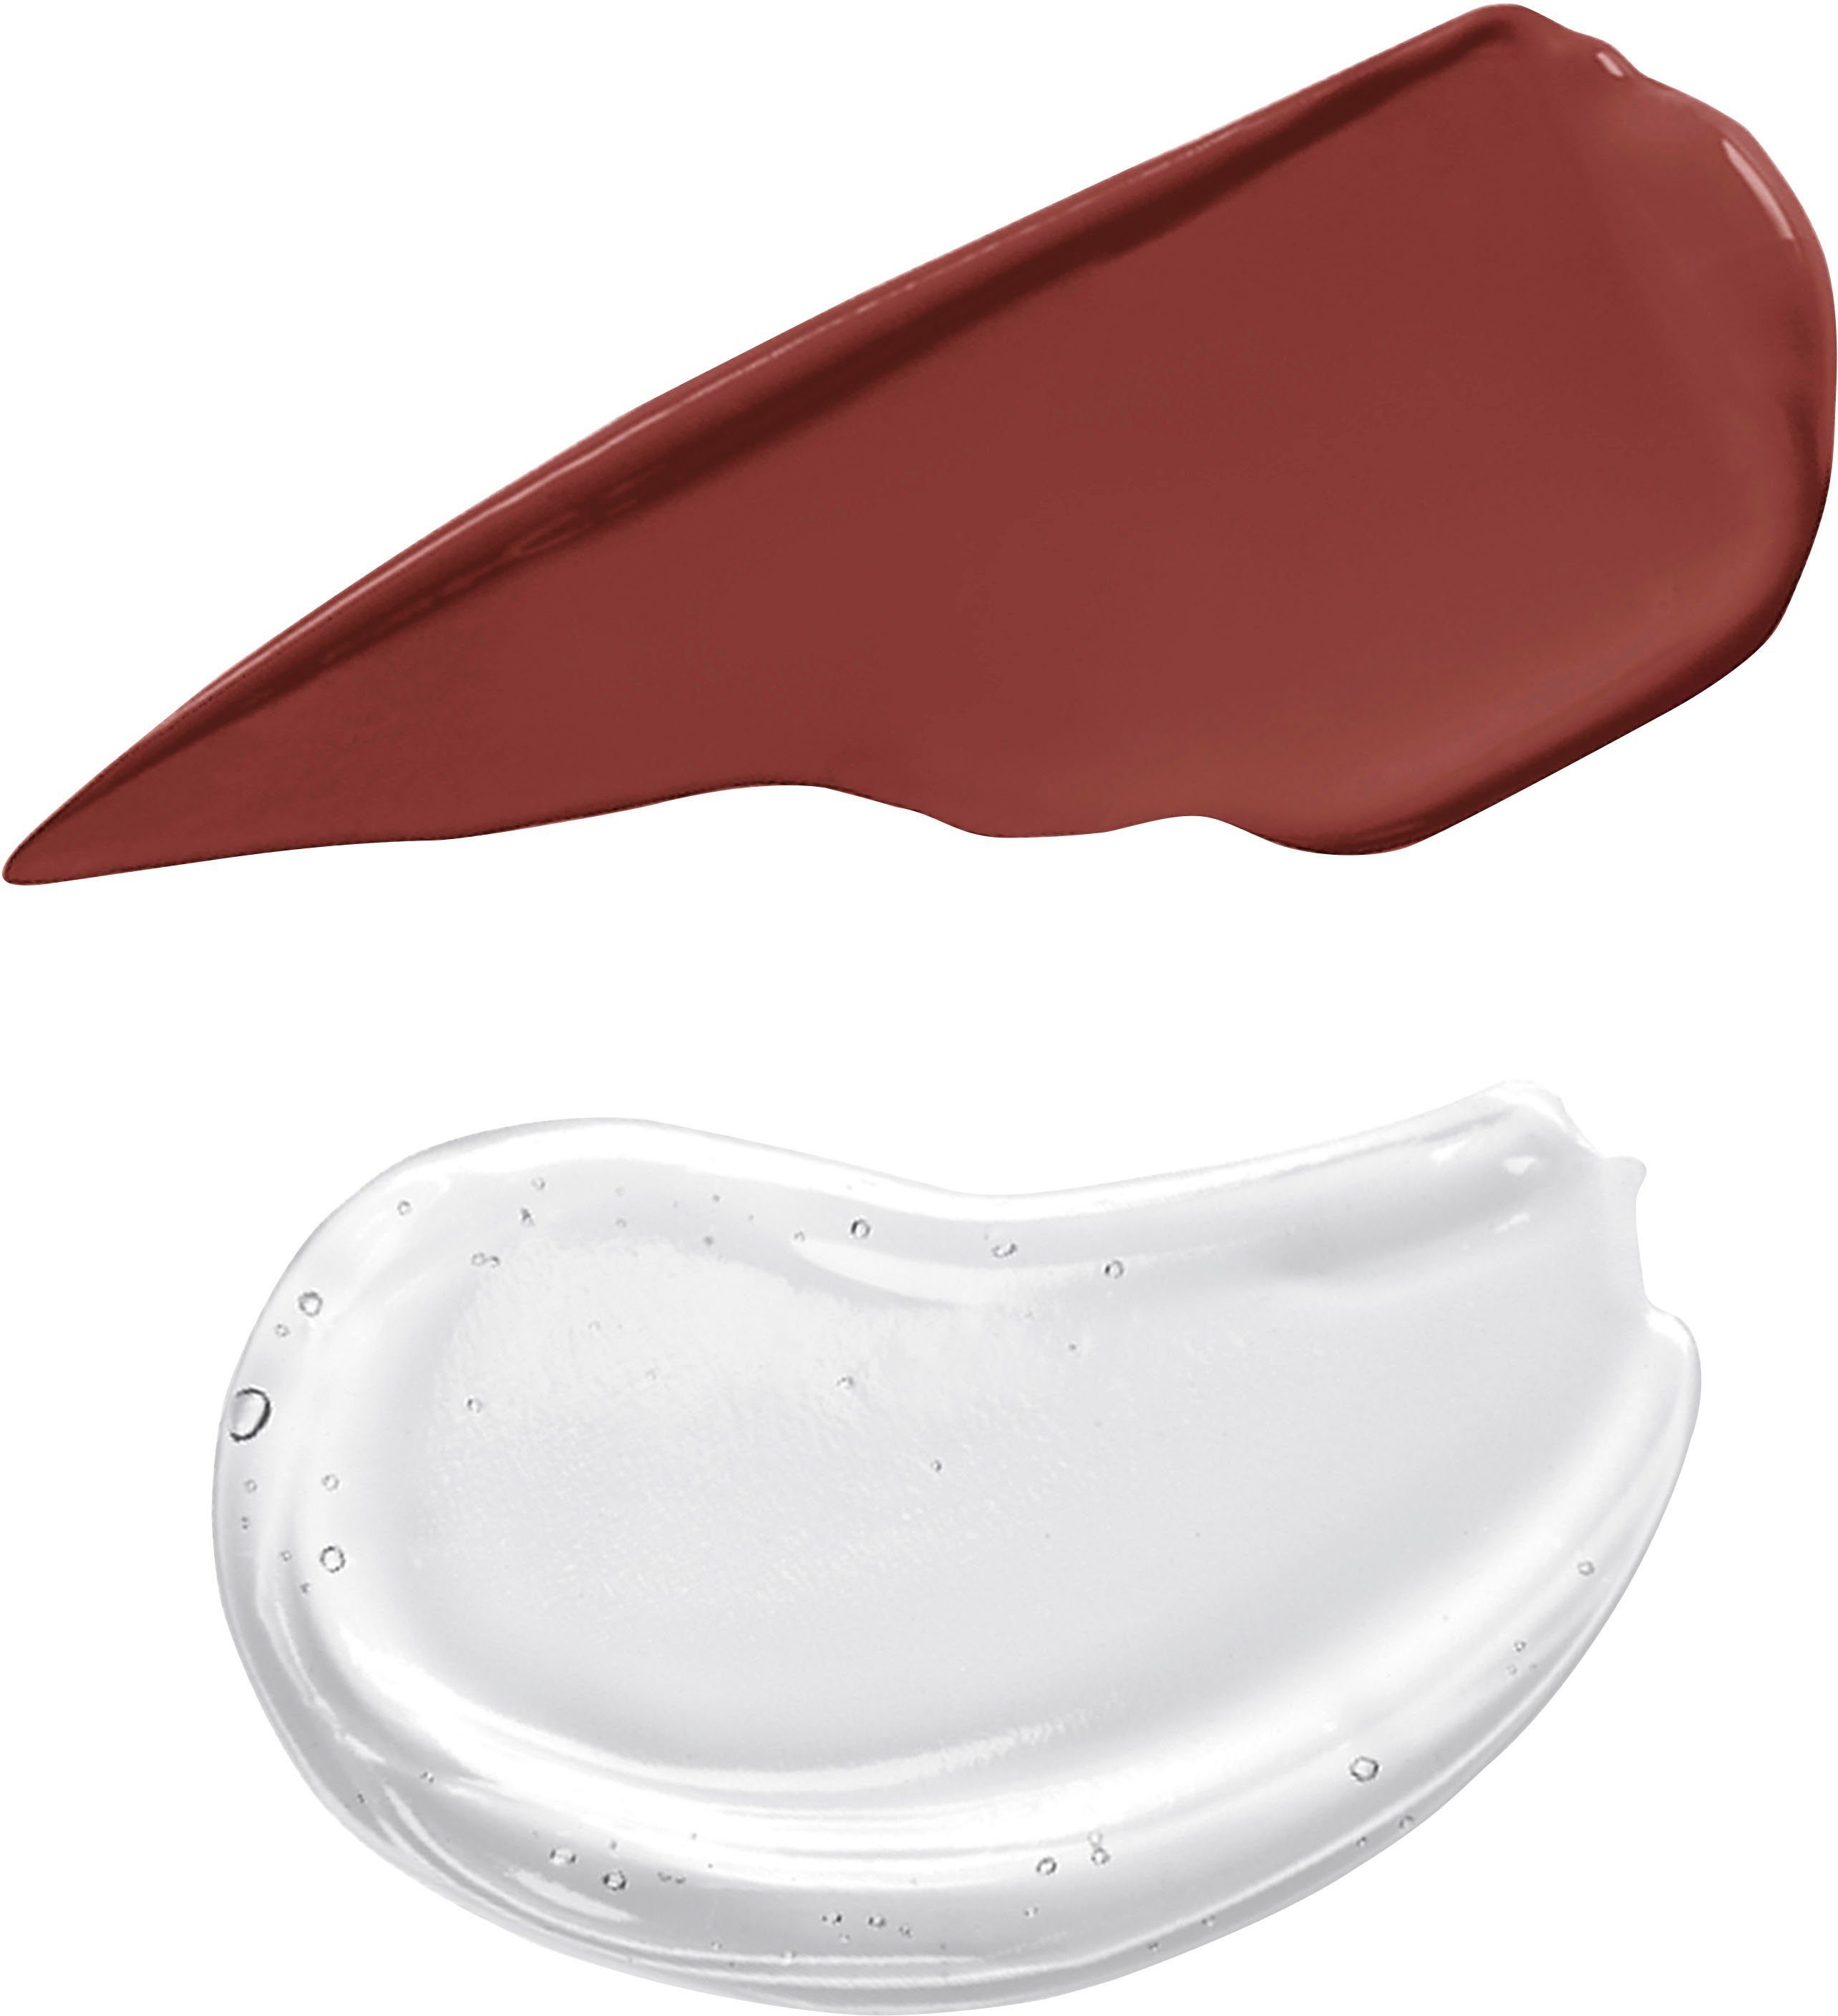 Applikator Auftrag brown Pigment NYX Shine präziser mit Makeup geformtem Loud Professional SHLP06 Shine, Lip Lippenstift High Pusher